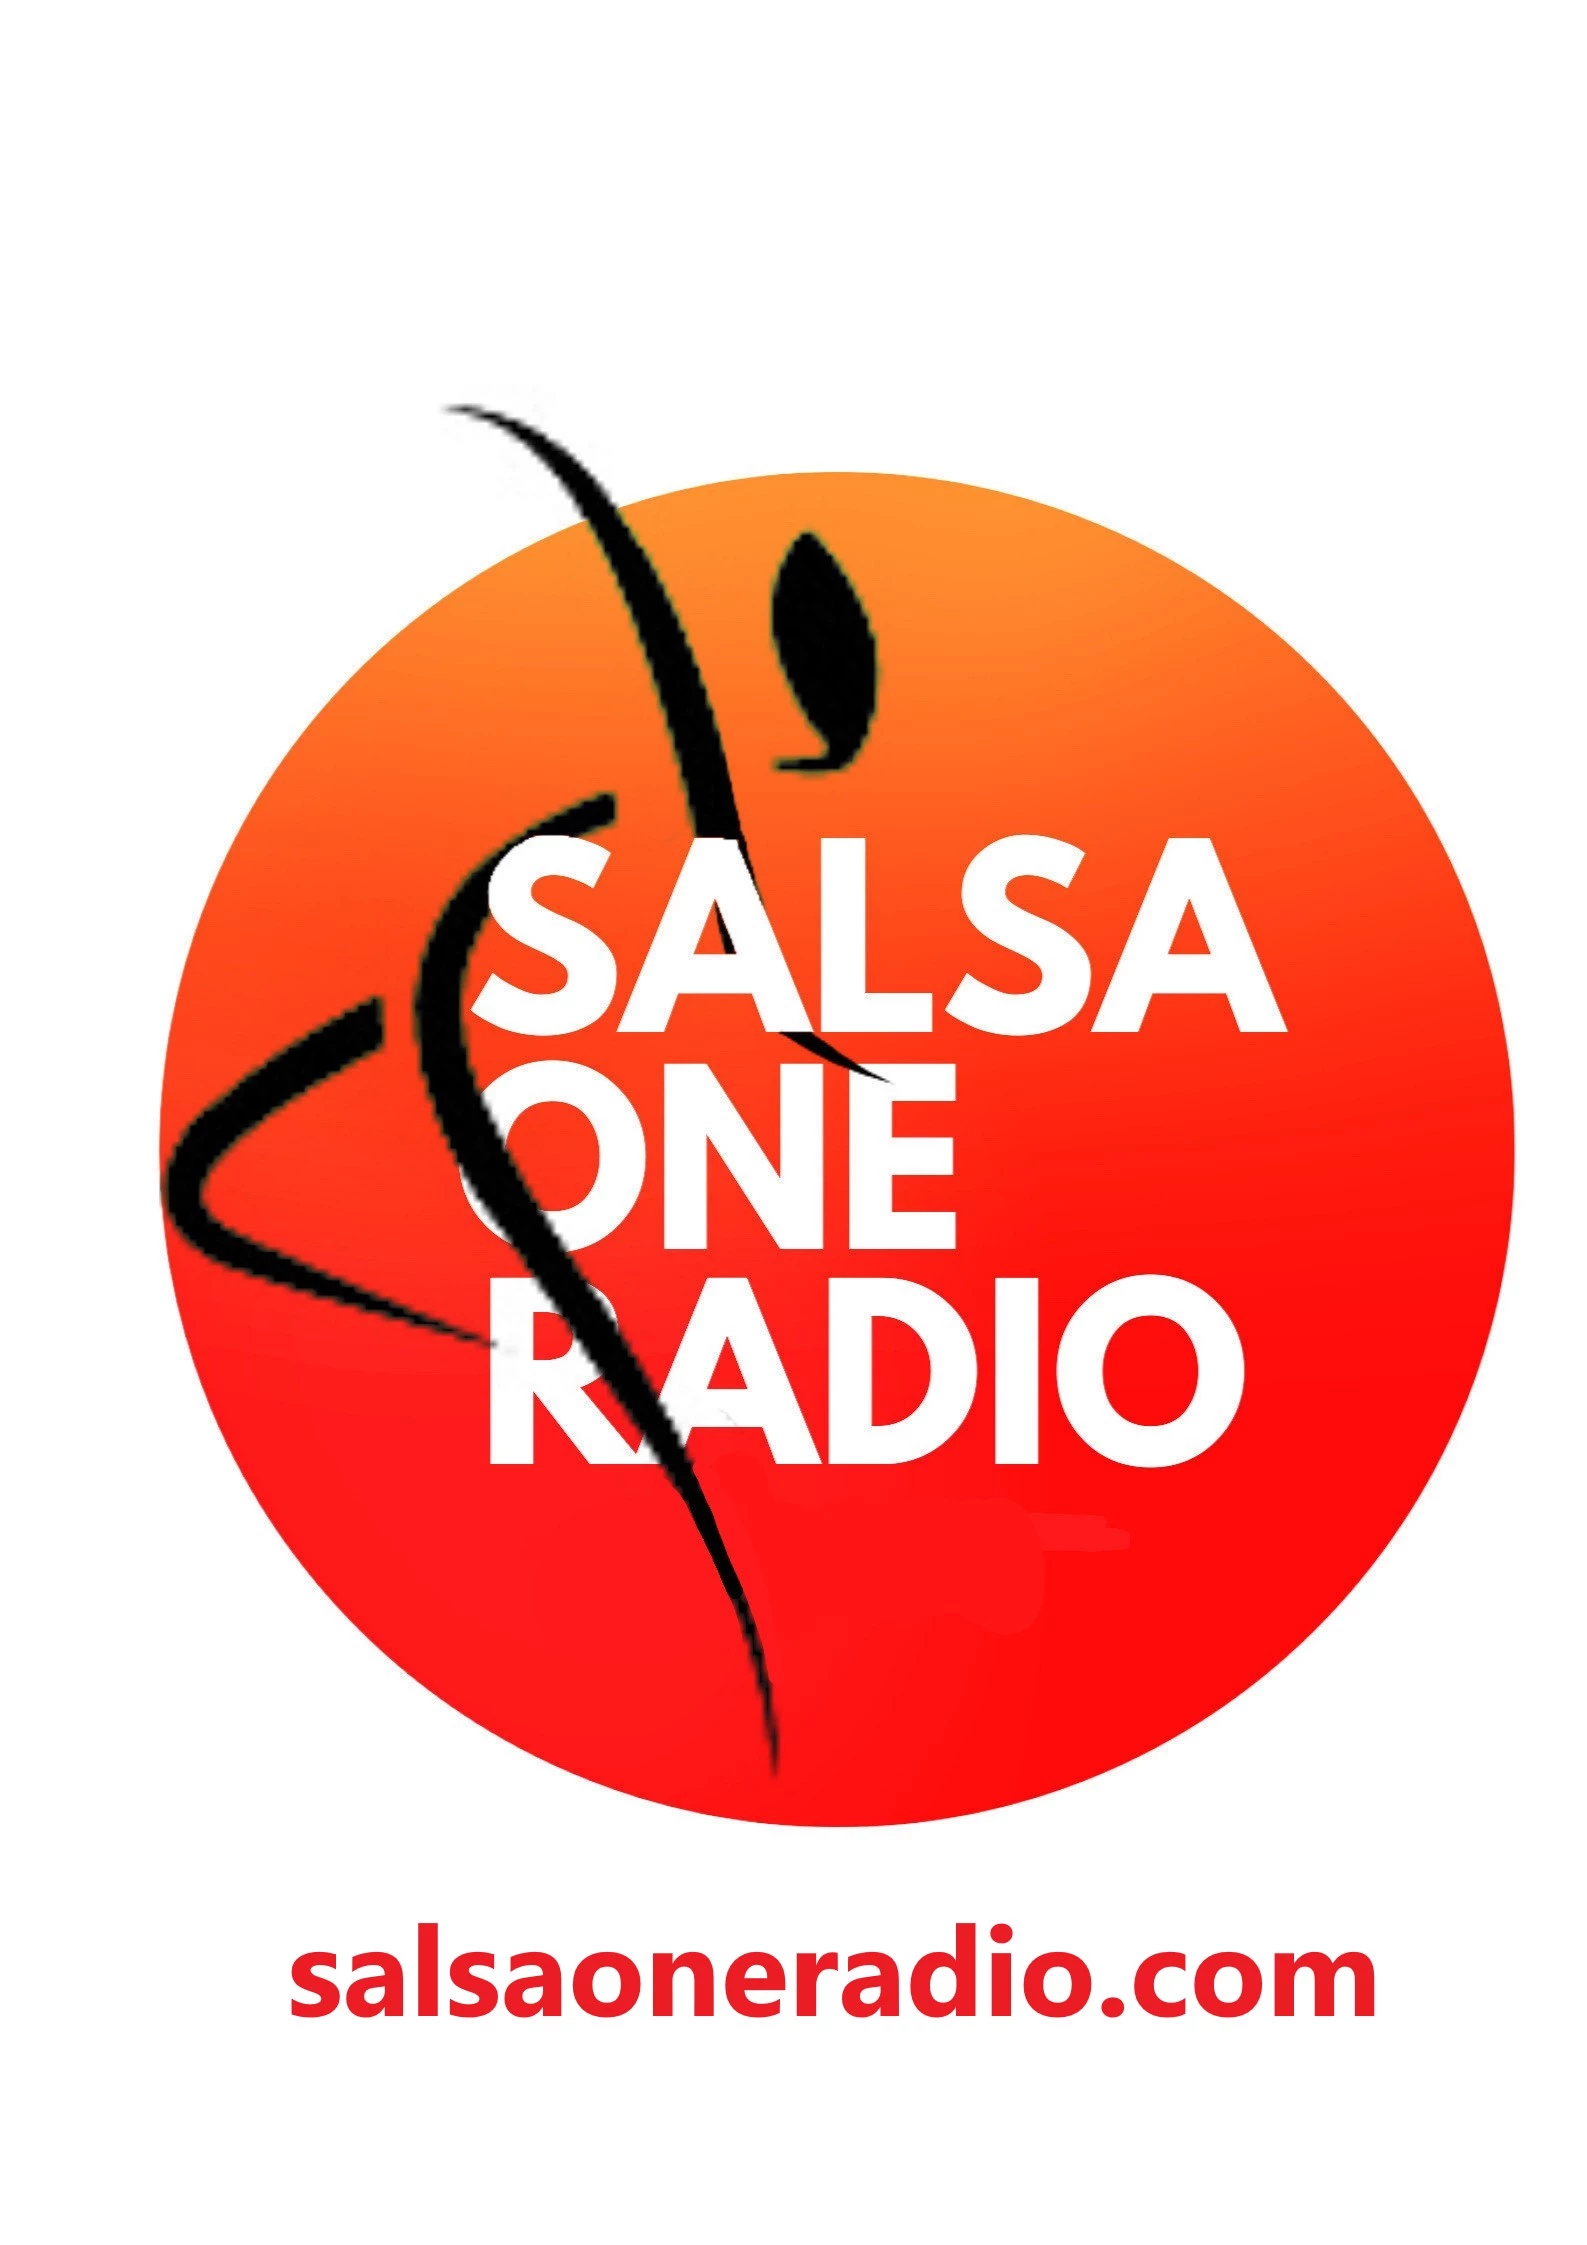 SALSA ONE RADIO